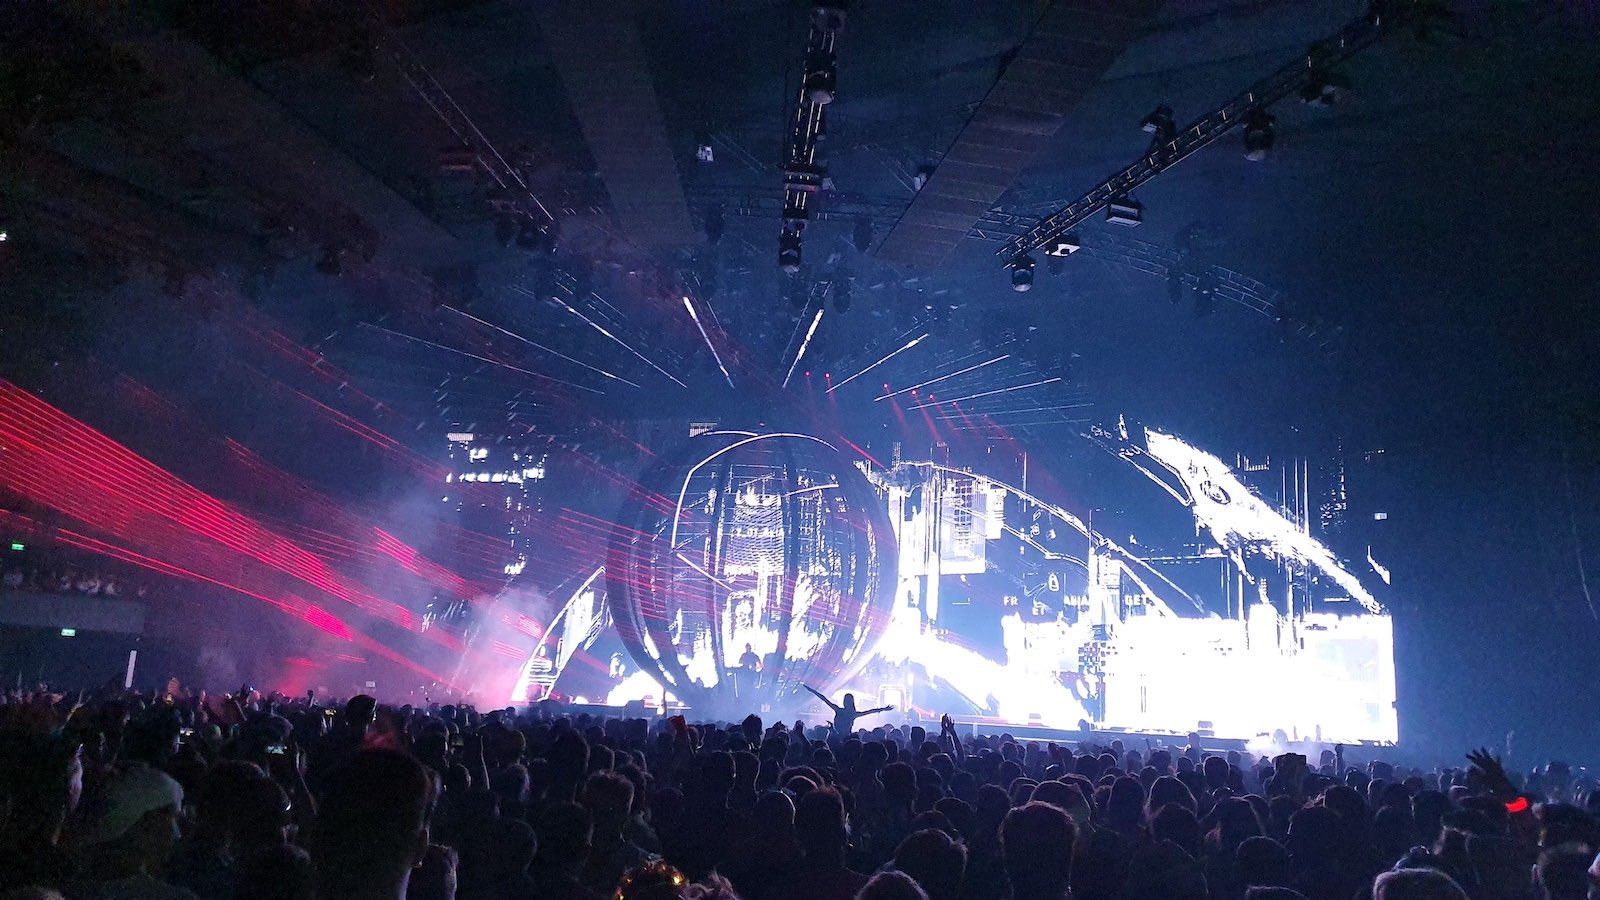 EPIC 6.0: Holosphere van Eric Prydz op Tomorrowland 2019